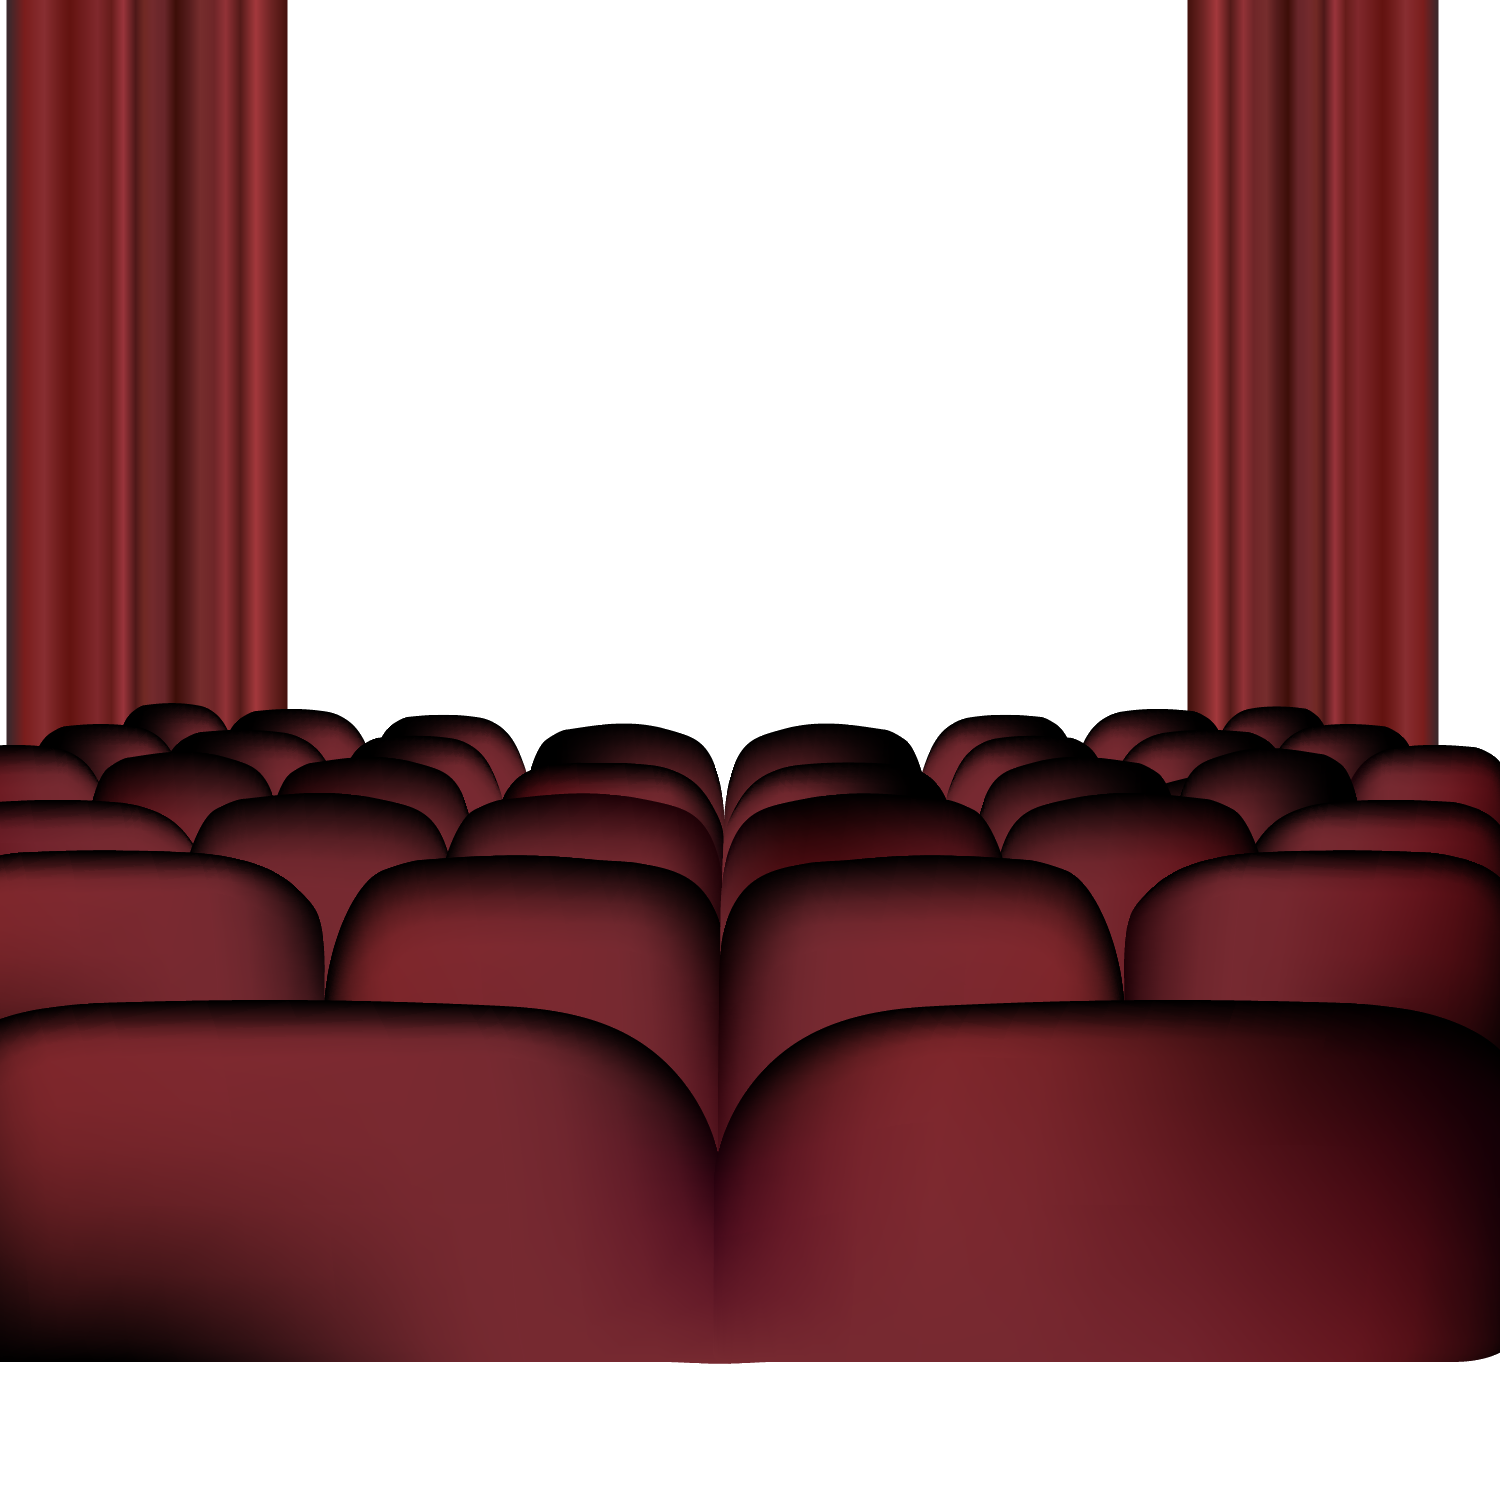 Top 90+ Wallpaper Auditorium Empty Movie Theater Seats Background Full ...